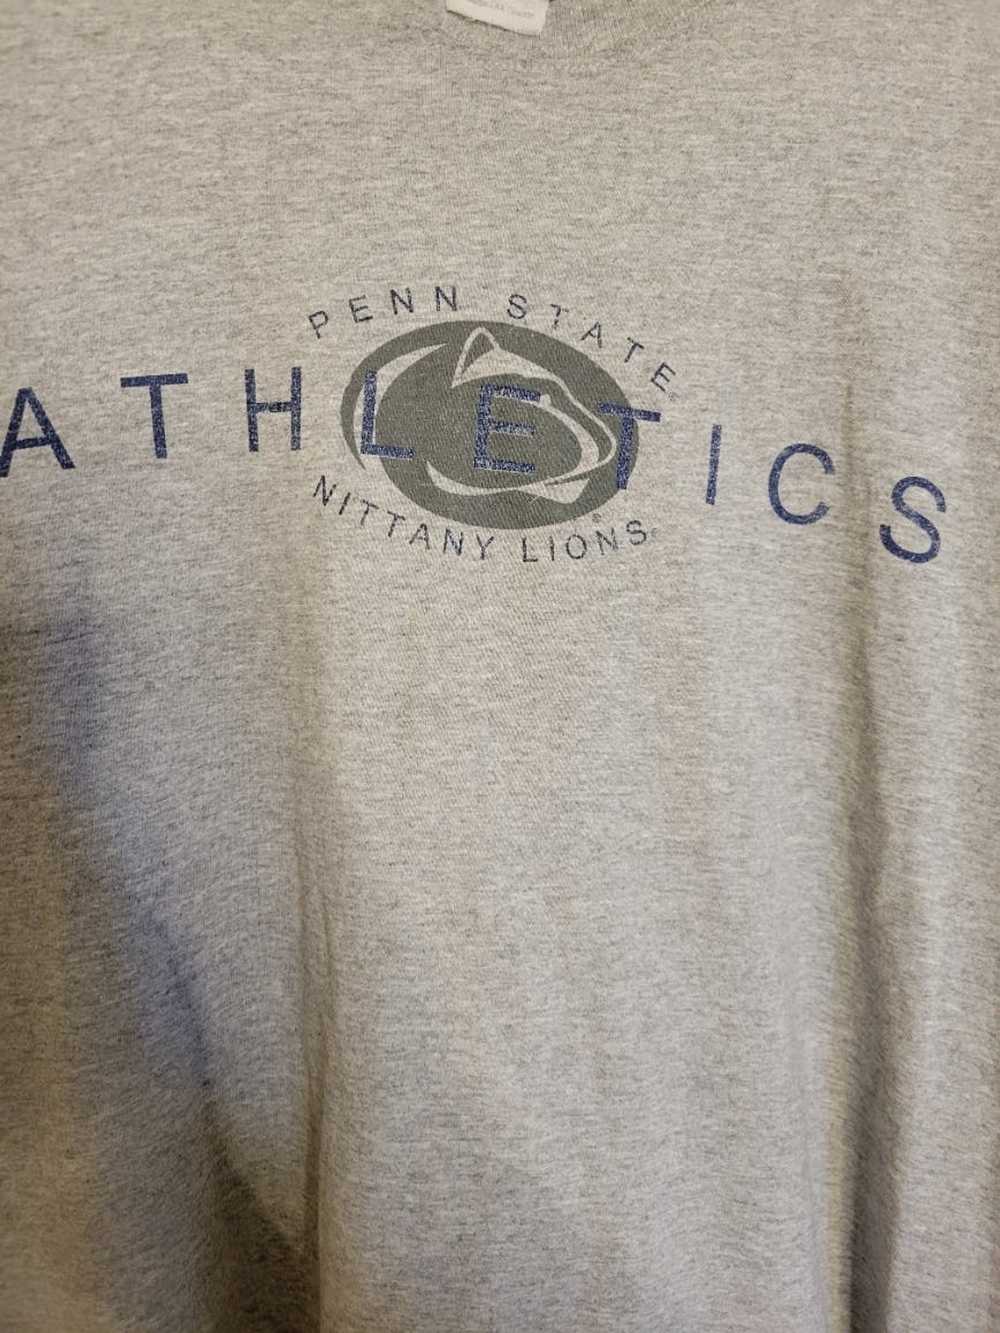 Athletic Penn State Athletics Tshirt - image 2